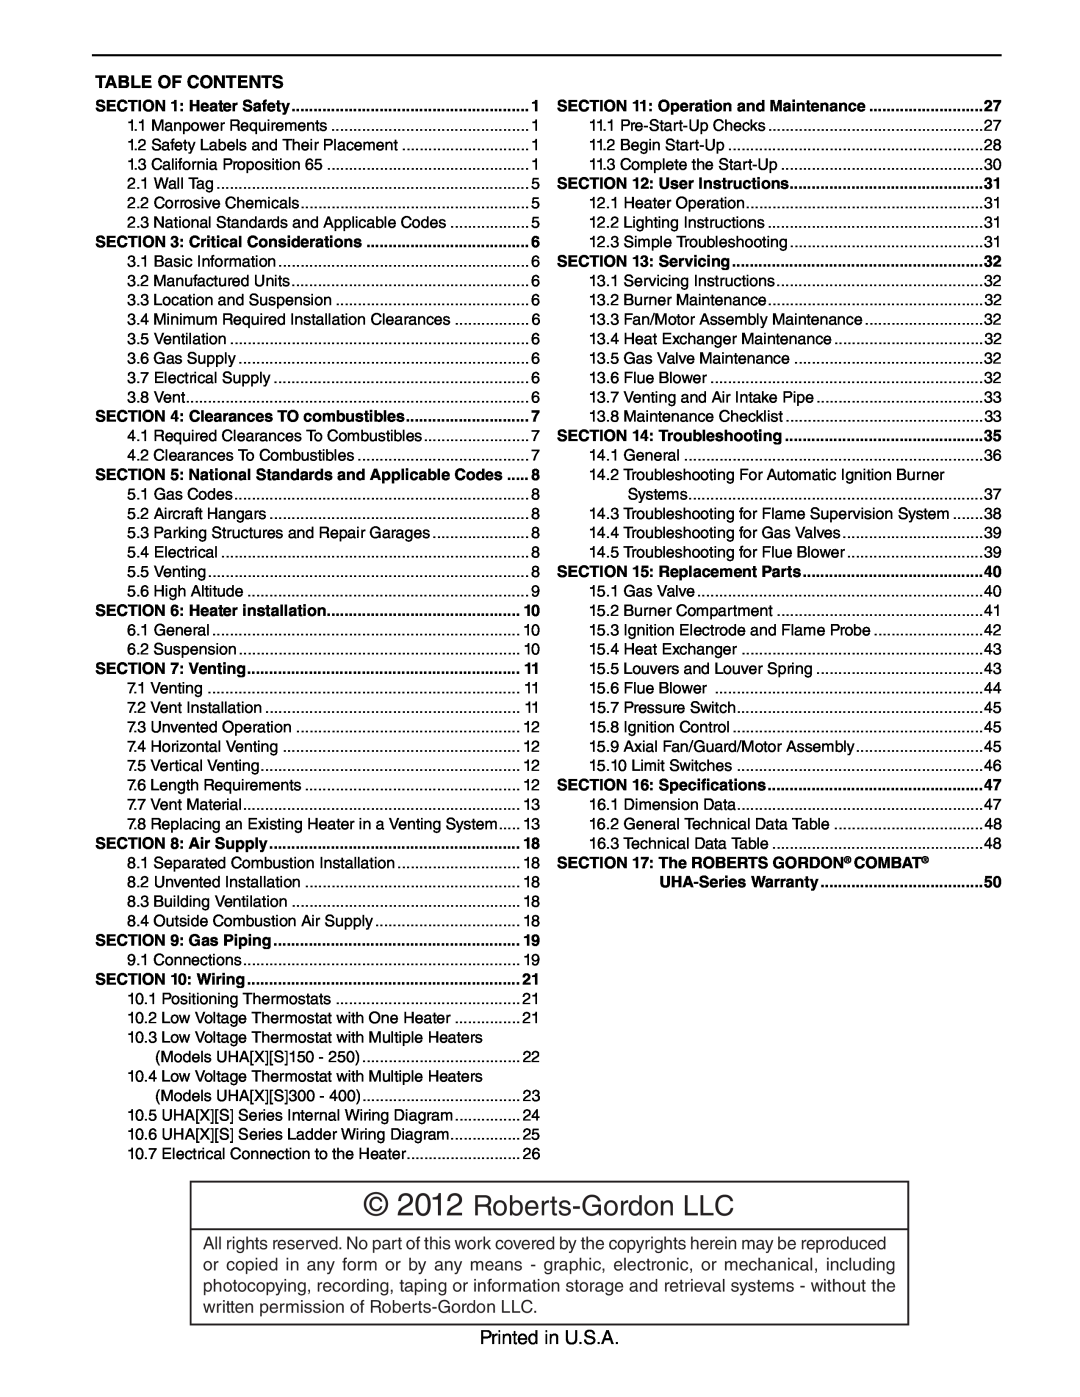 Roberts Gorden 300, 200, 350, 150, 400, 250, 225, 175 service manual Roberts-GordonLLC, Printed in U.S.A 